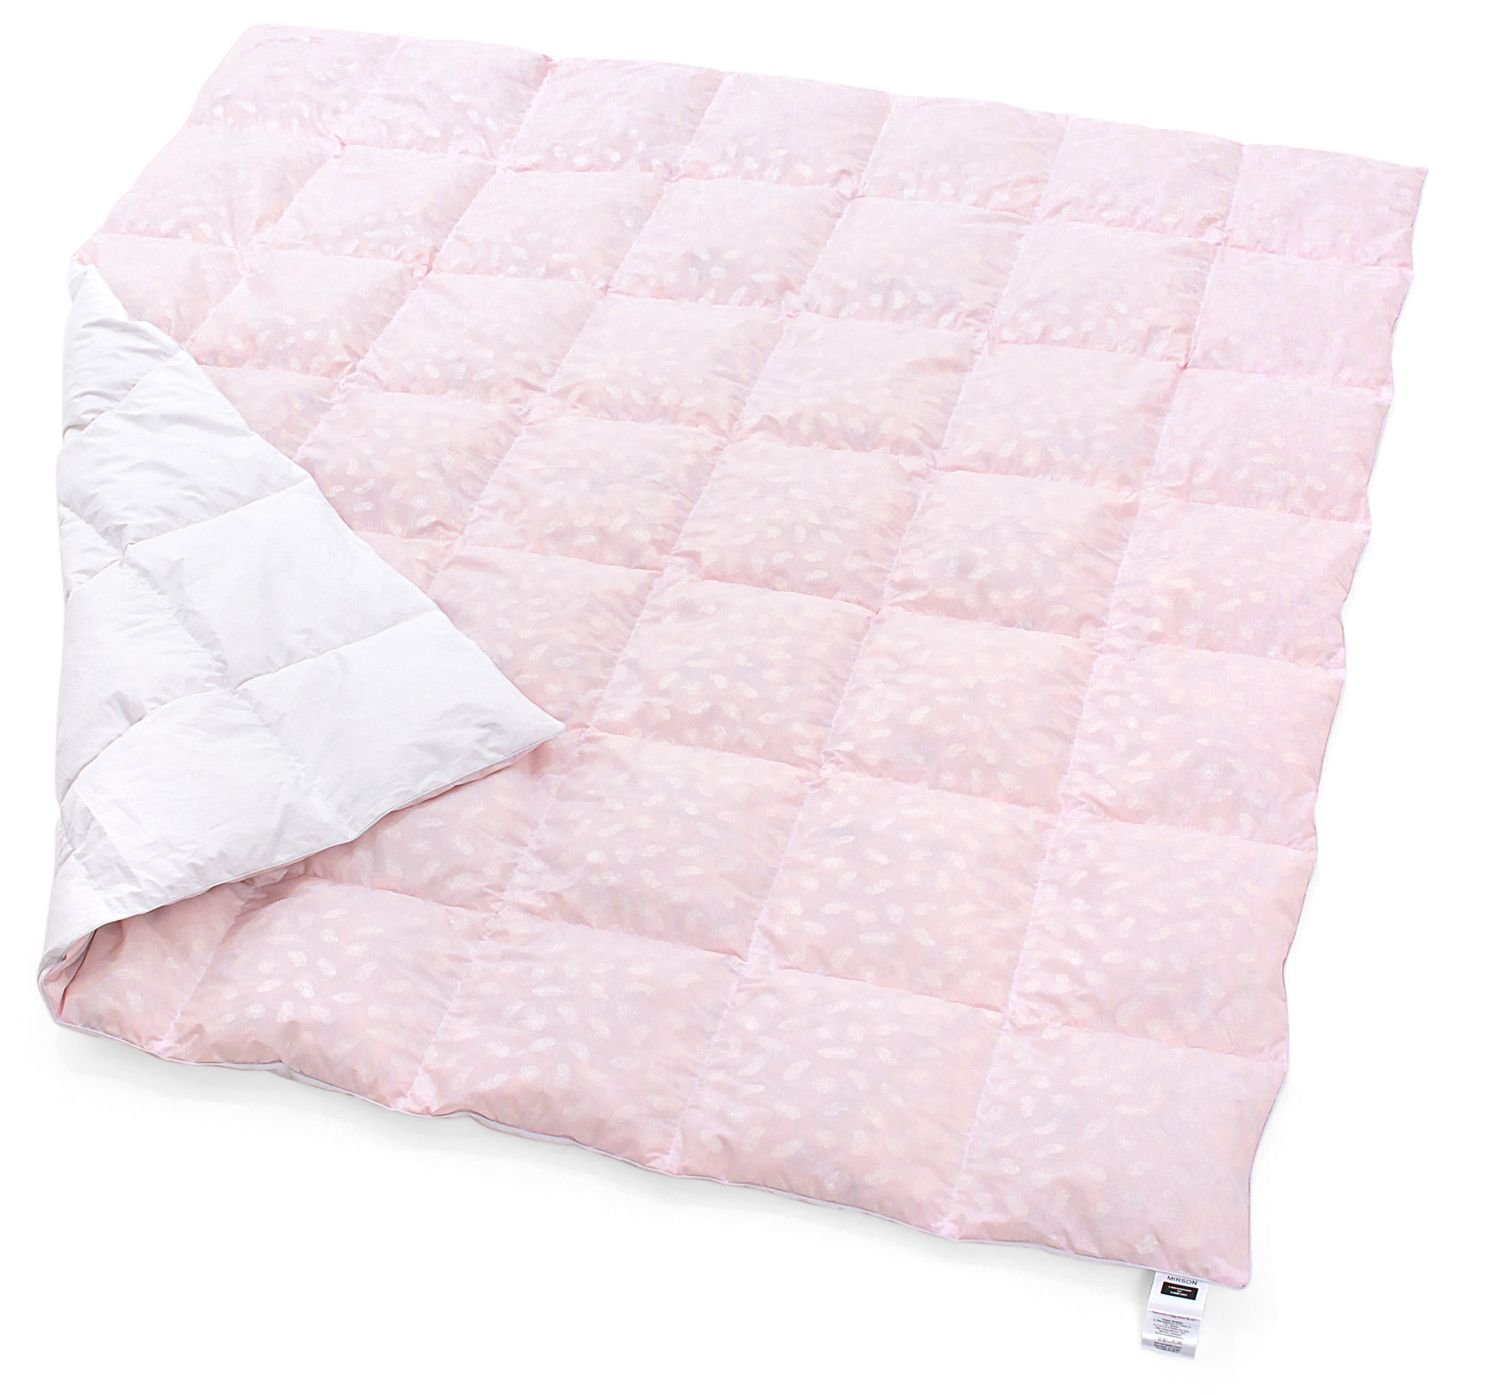 Одеяло пуховое MirSon Karmen №1838 Bio-Pink, 90% пух, полуторное, 205x140, розовое (2200003013481) - фото 2